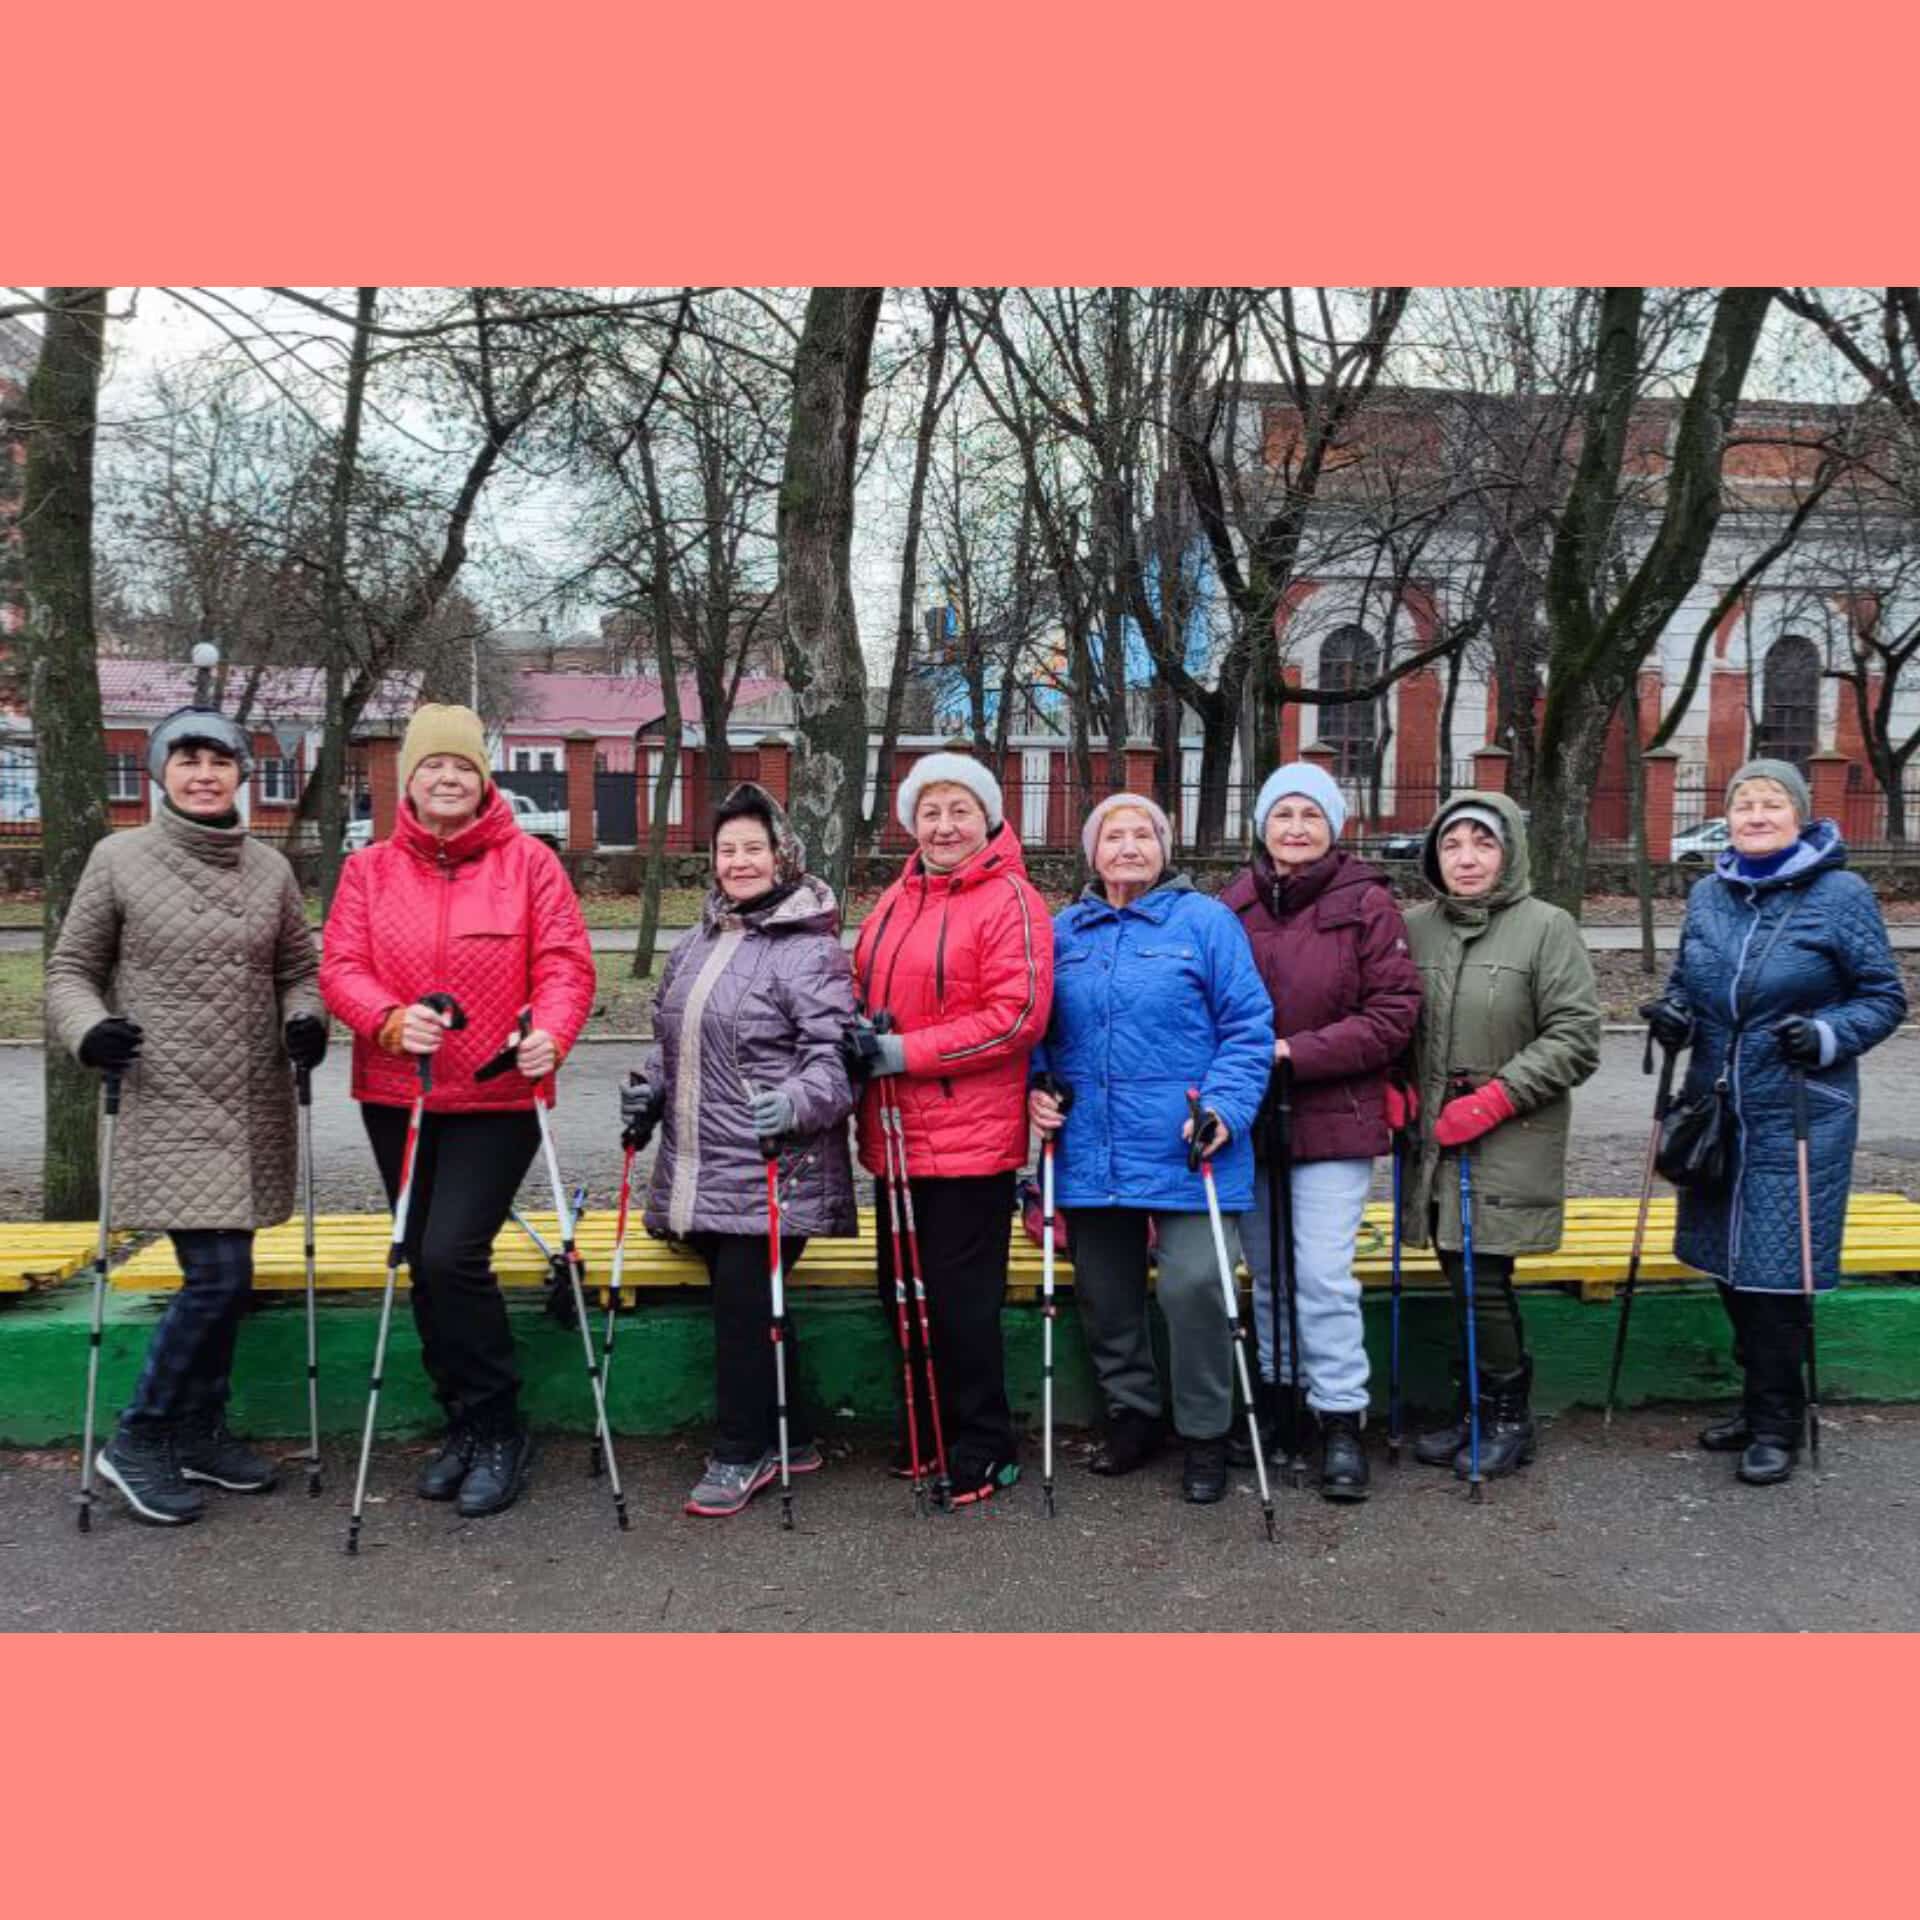 From Slovyansk to Kropyvnytskyi: who teaches modern skills to older people